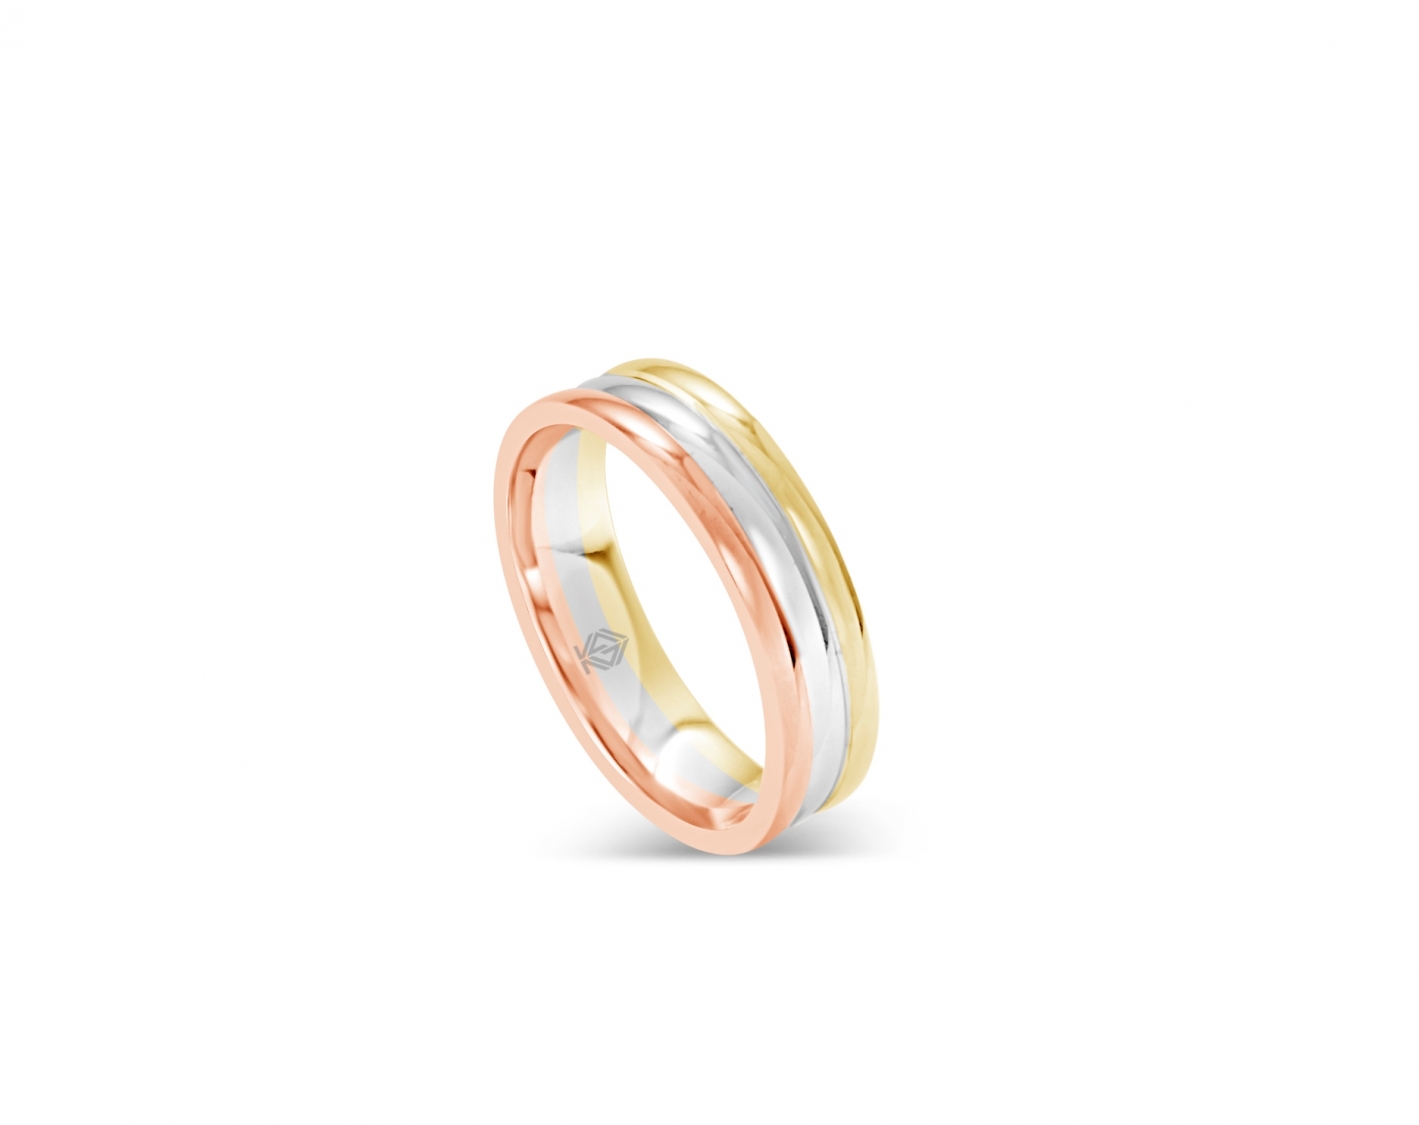 18k white gold 5mm three-toned wedding ring Photos & images